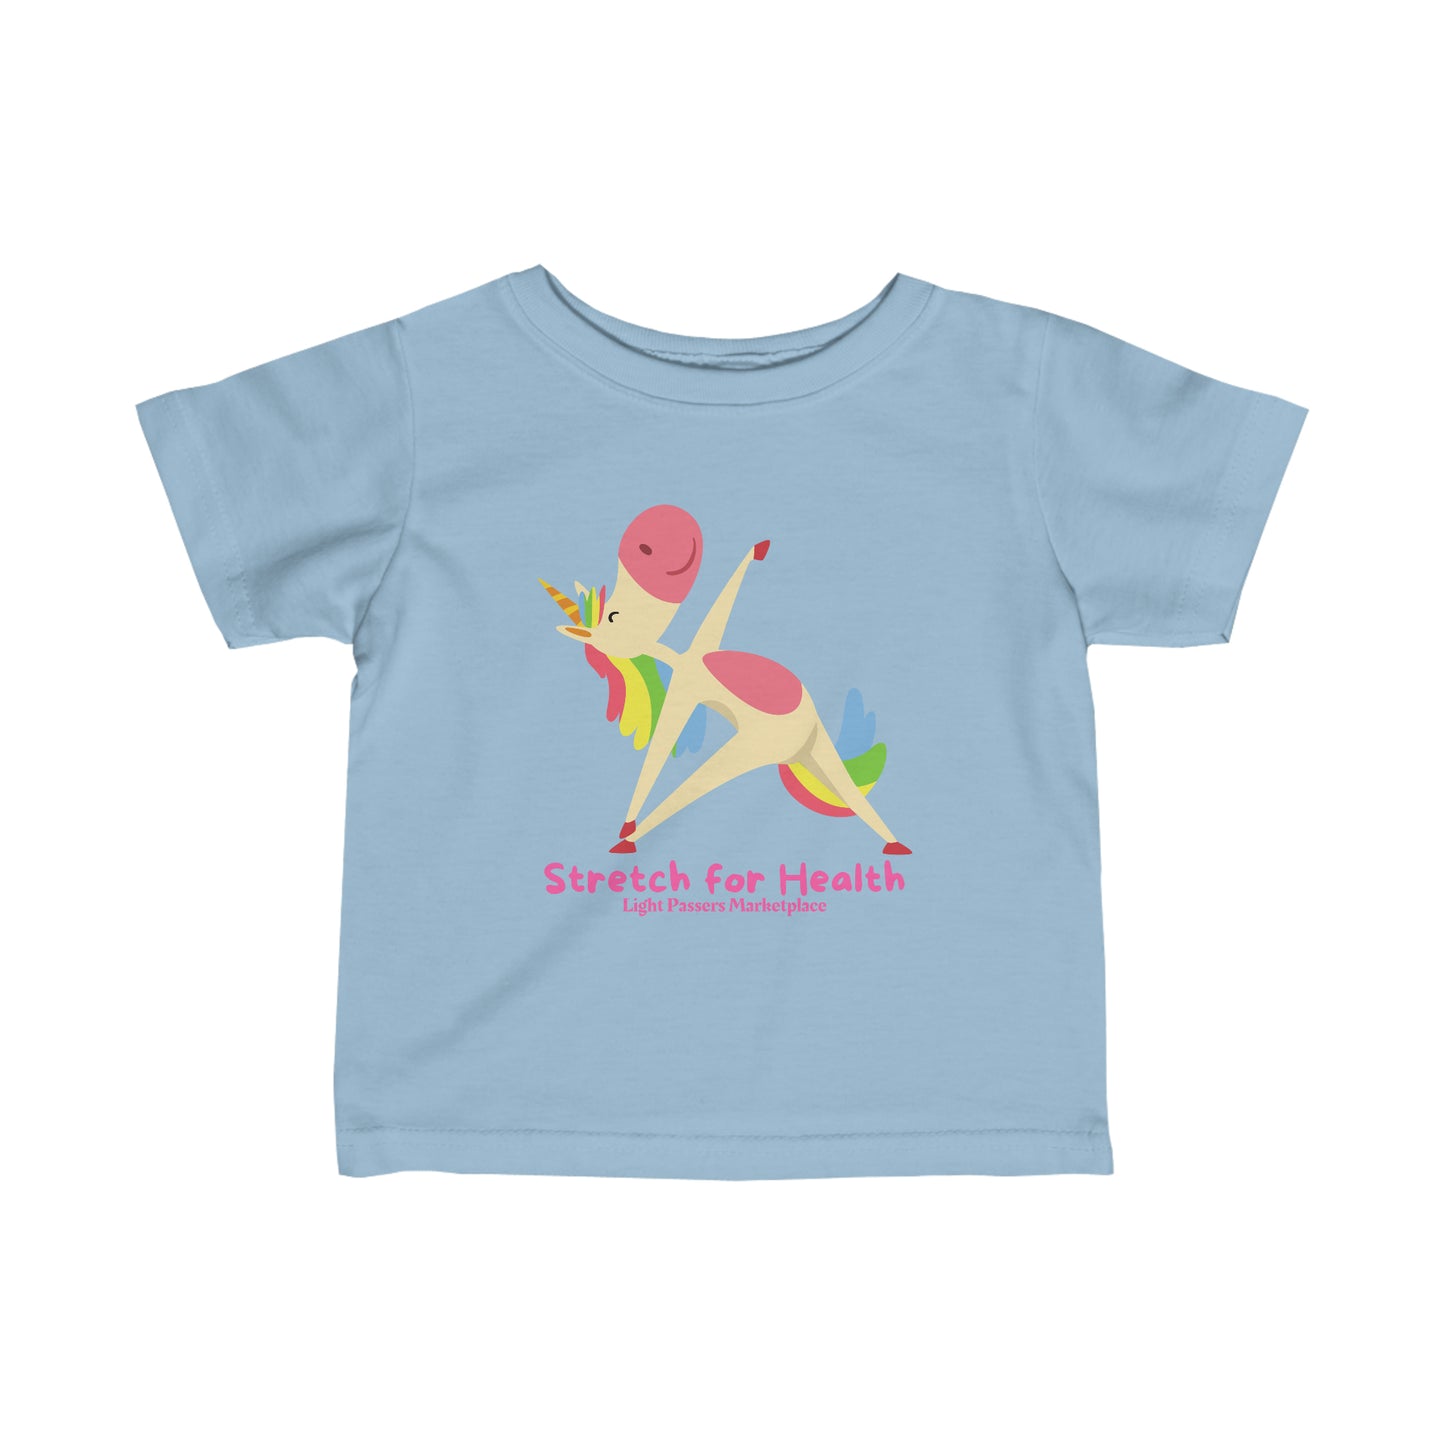 Light Passers Marketplace Unicorn Stretching Baby T-shirt Fitness, Mental Health